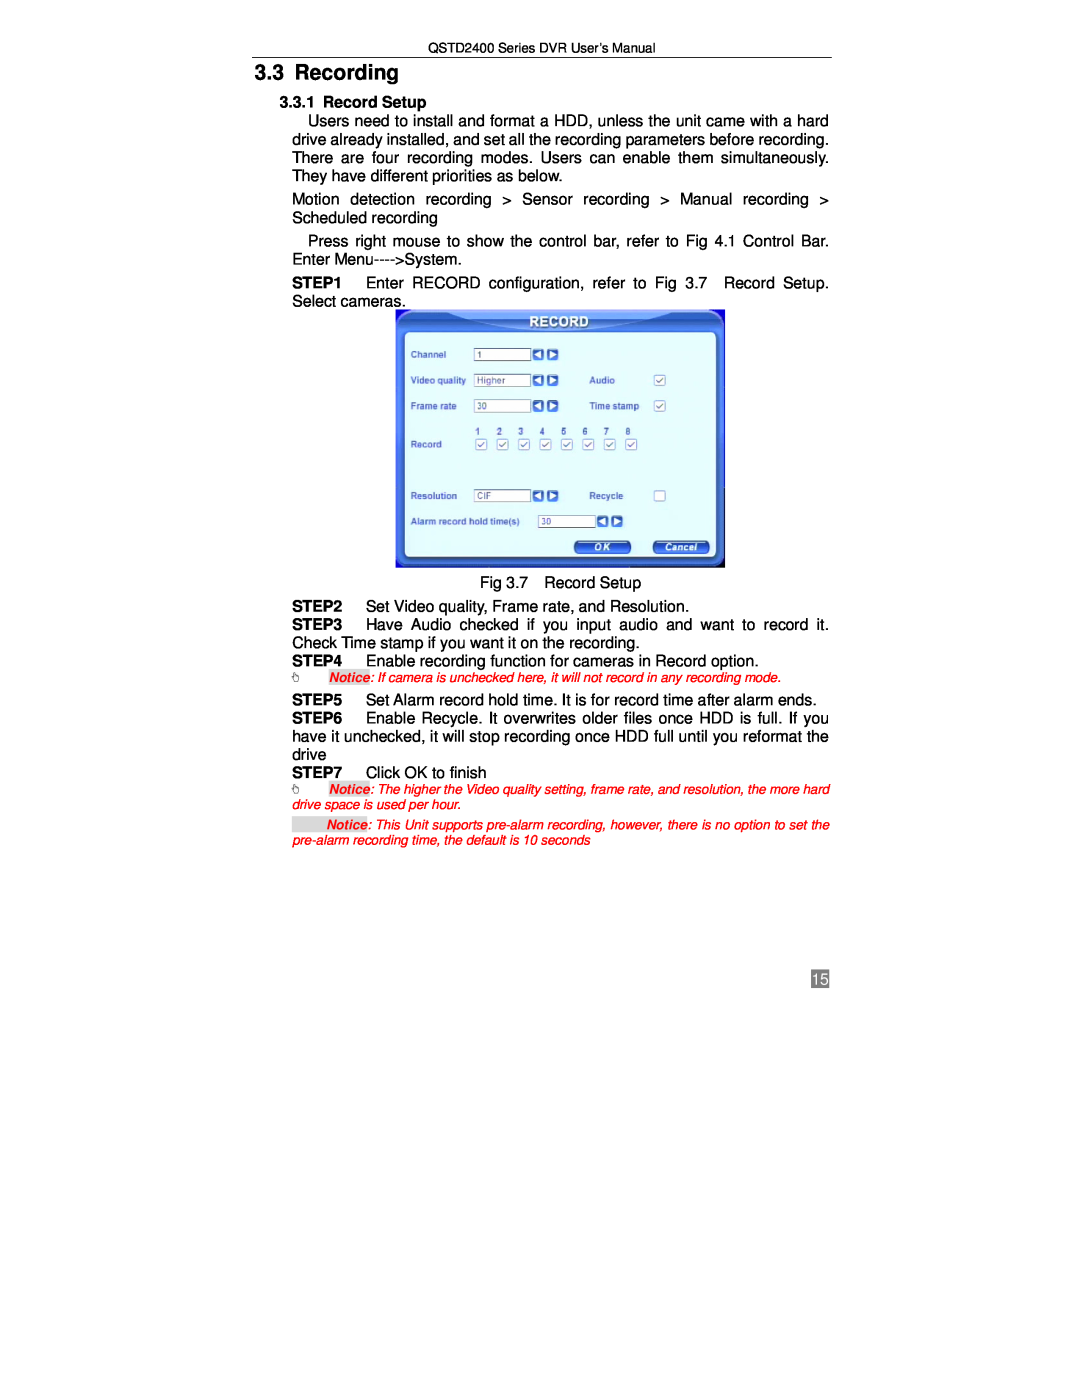 Q-See QSTD2408, QSTD2416, QSTD2404 user manual 3.3Recording, 3.3.1Record Setup 